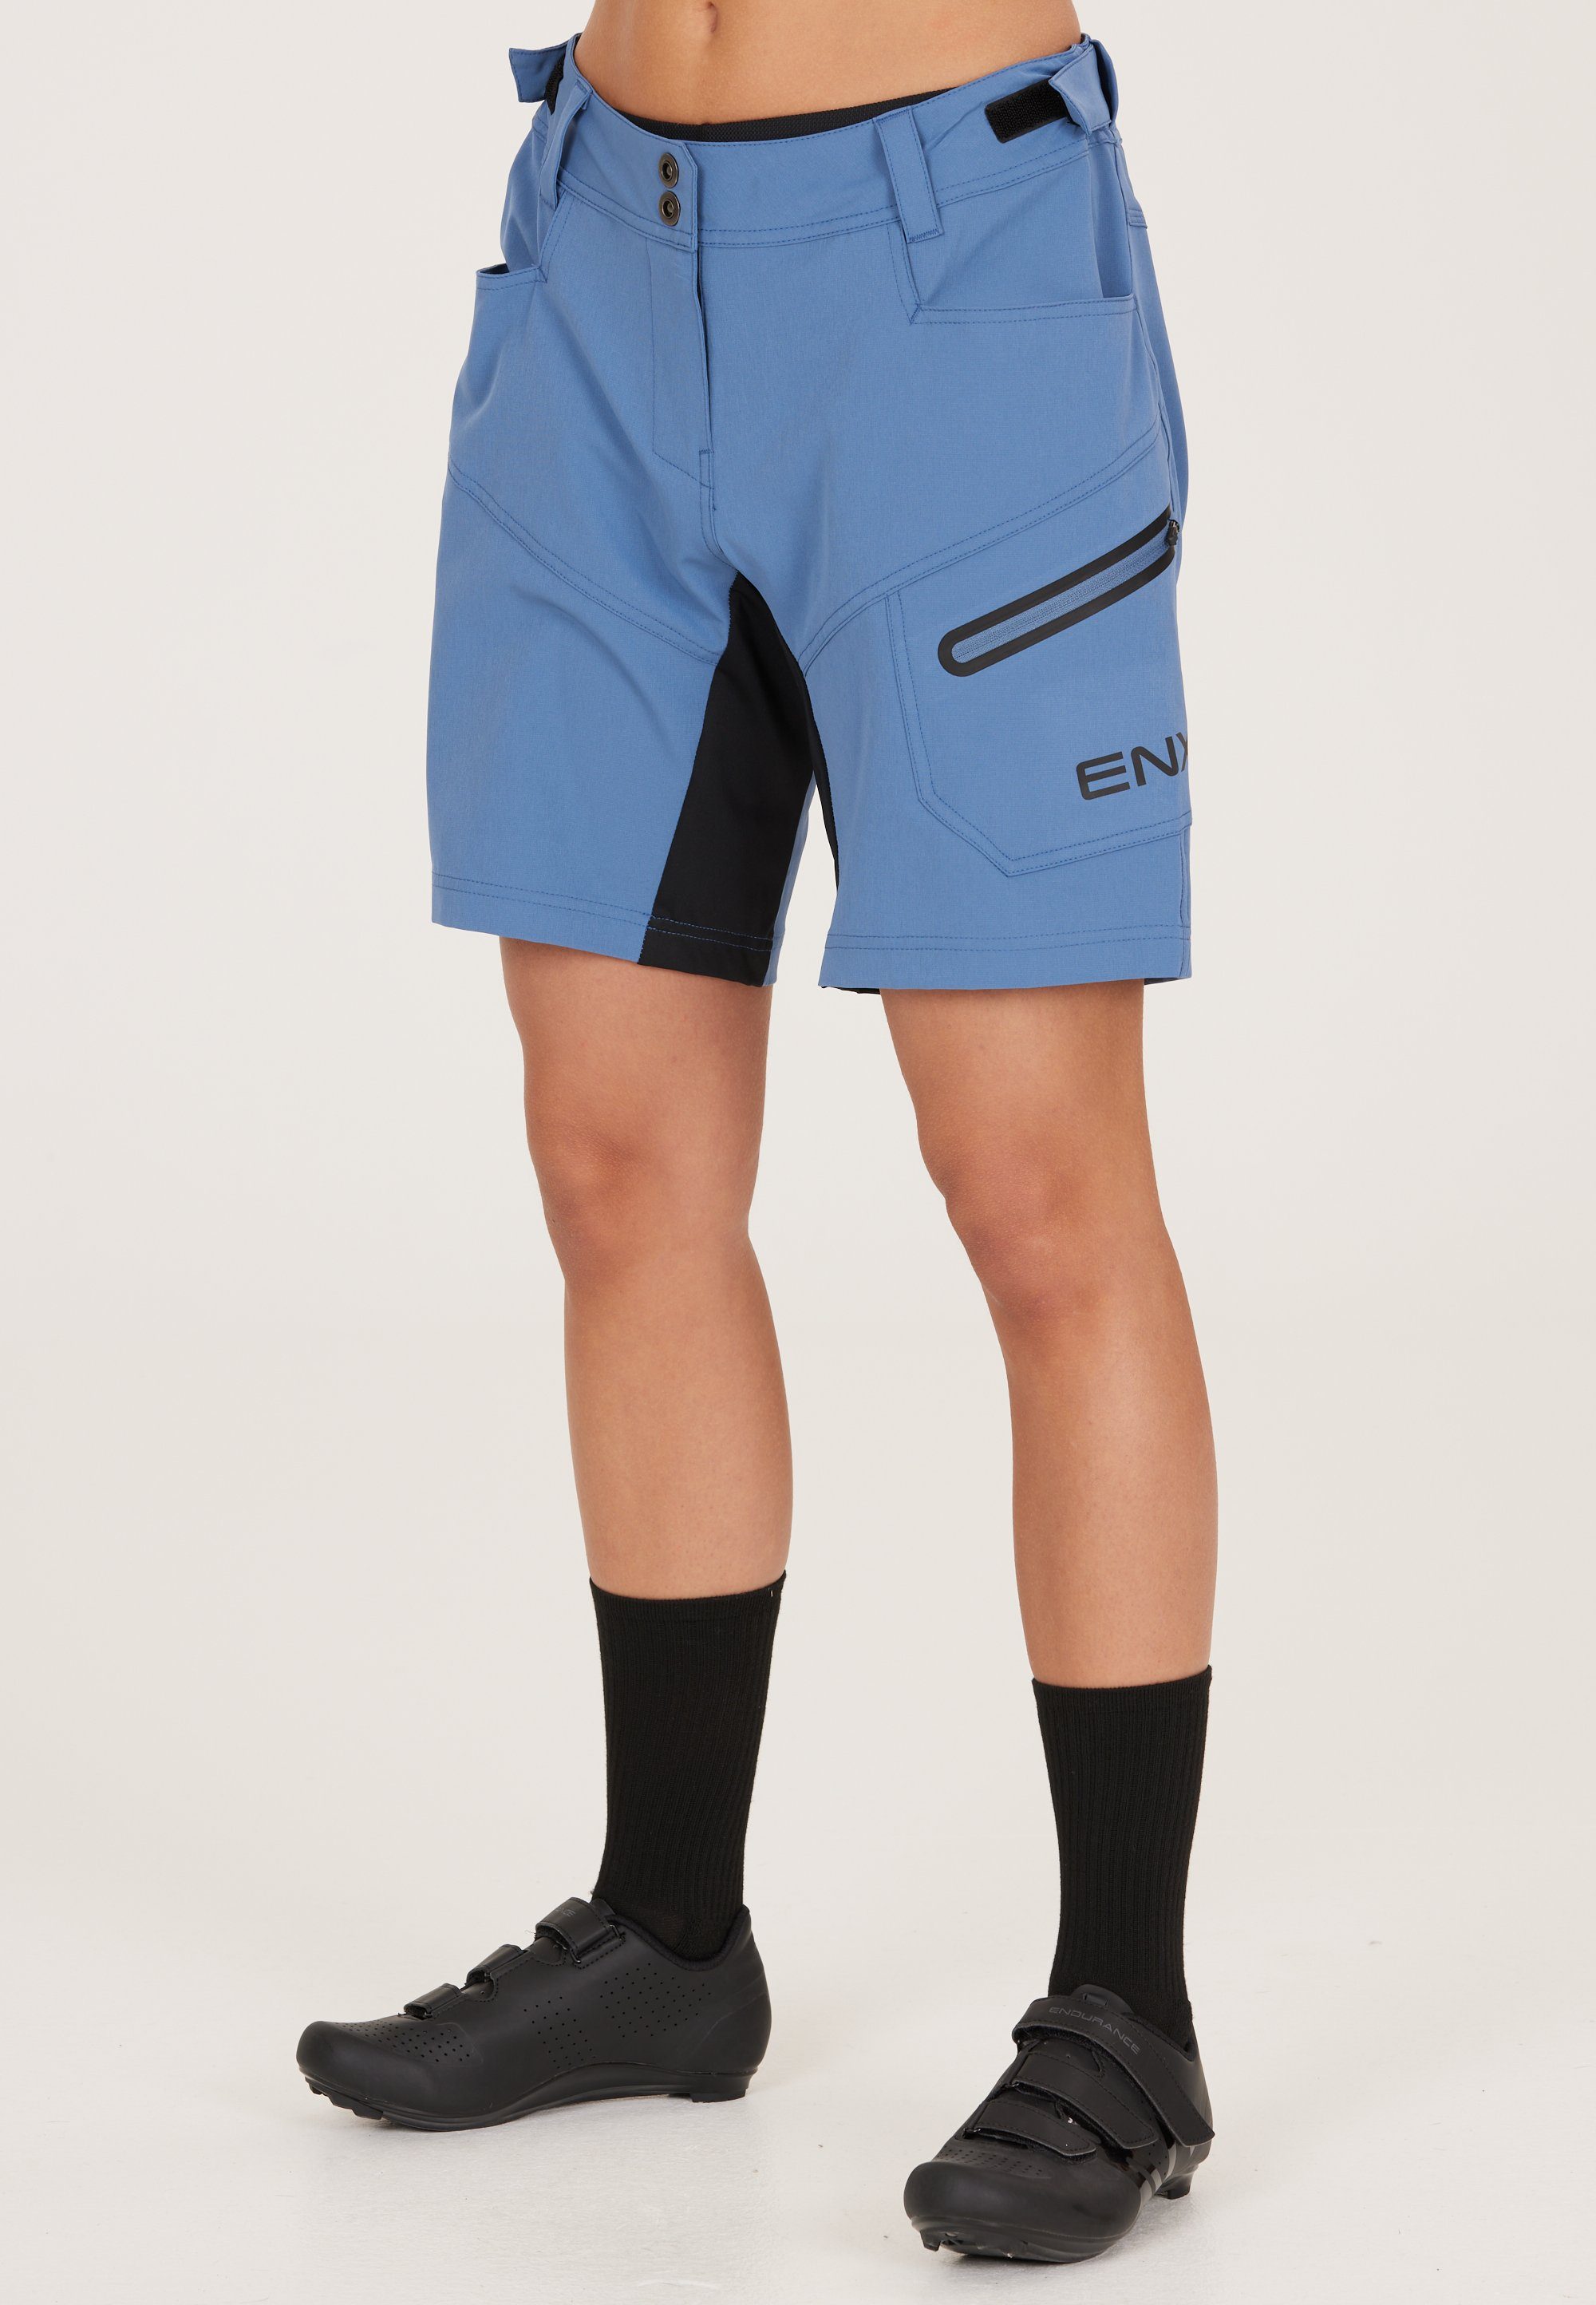 in blau 2 ENDURANCE 1 Radhose Shorts herausnehmbarer mit Jamilla Innen-Tights W